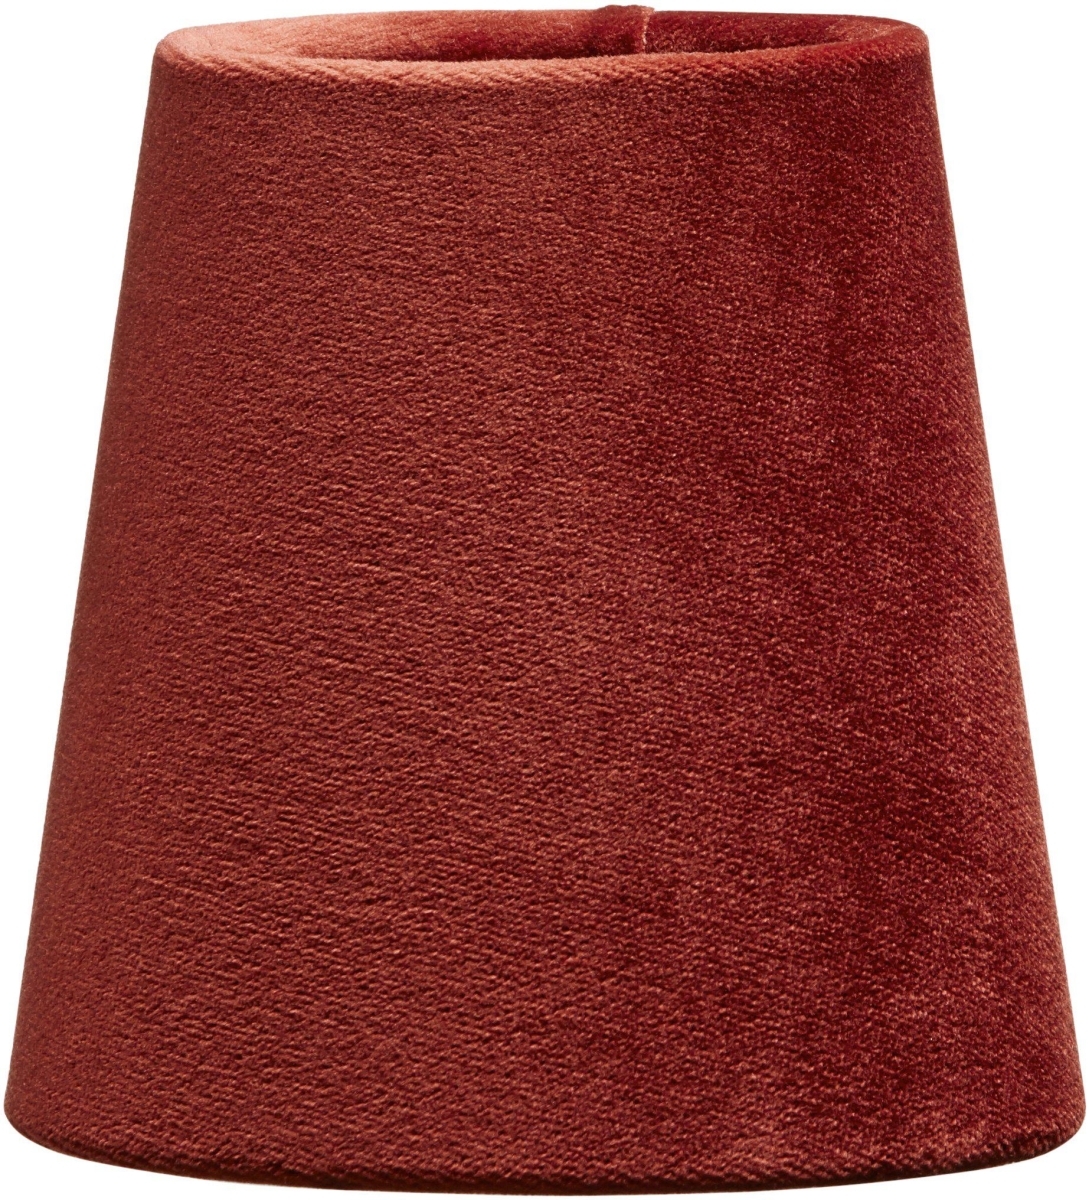 Lampenschirm Textil Samt rost rot PR Home Queen 12x12cm Befestigungsklipp fr Kerzen Leuchtmittel